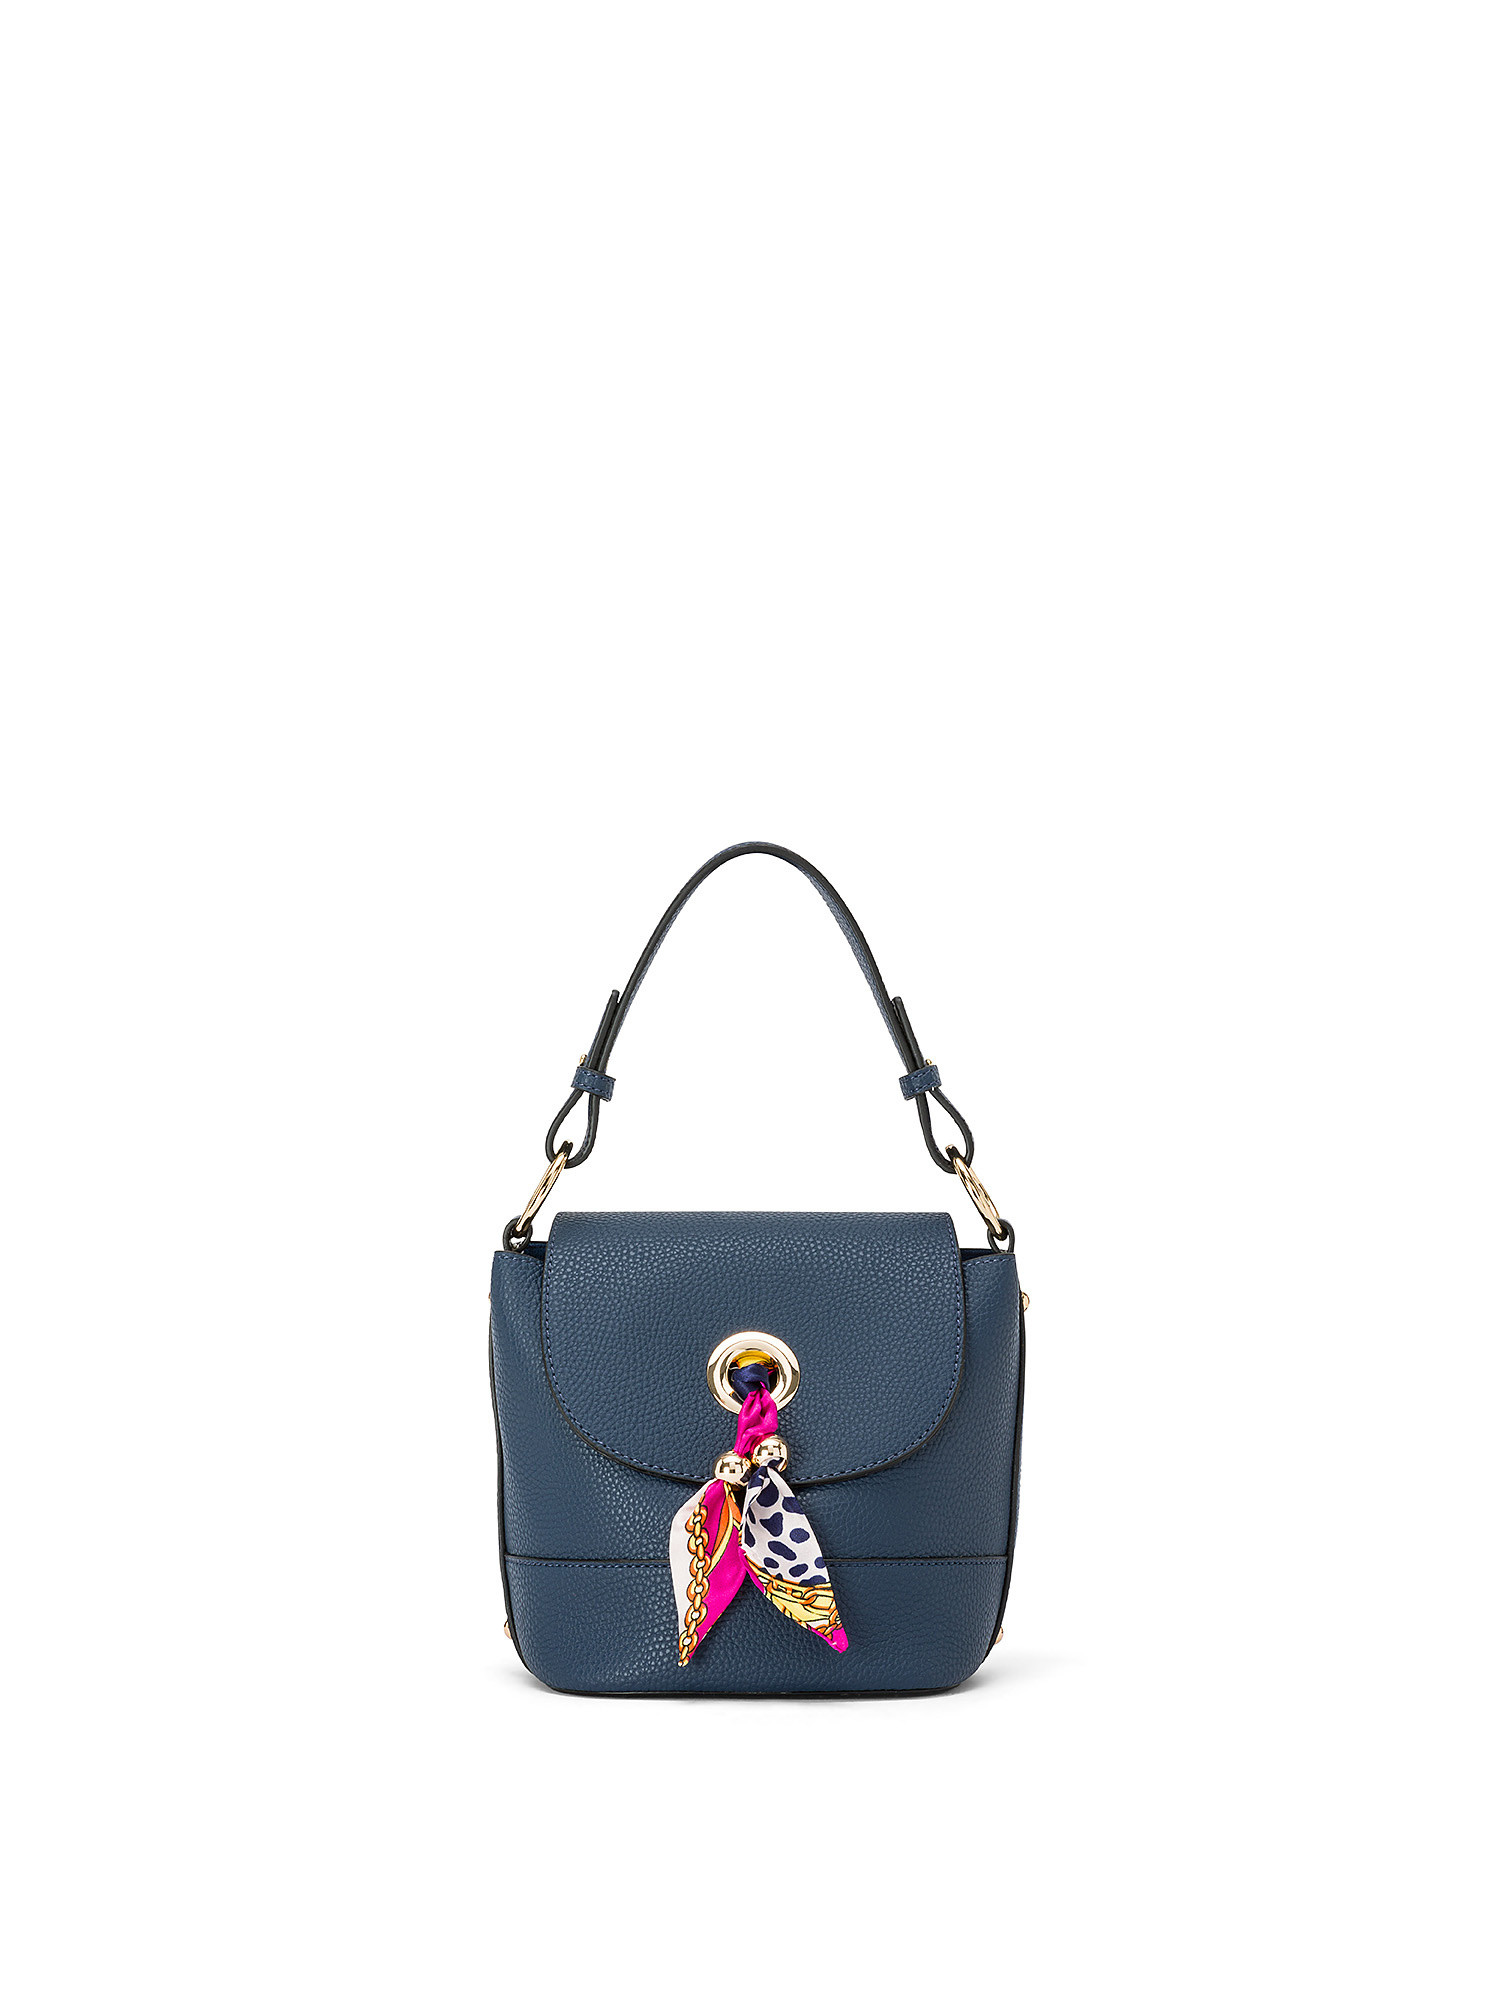 Koan - Handbag, Dark Blue, large image number 0